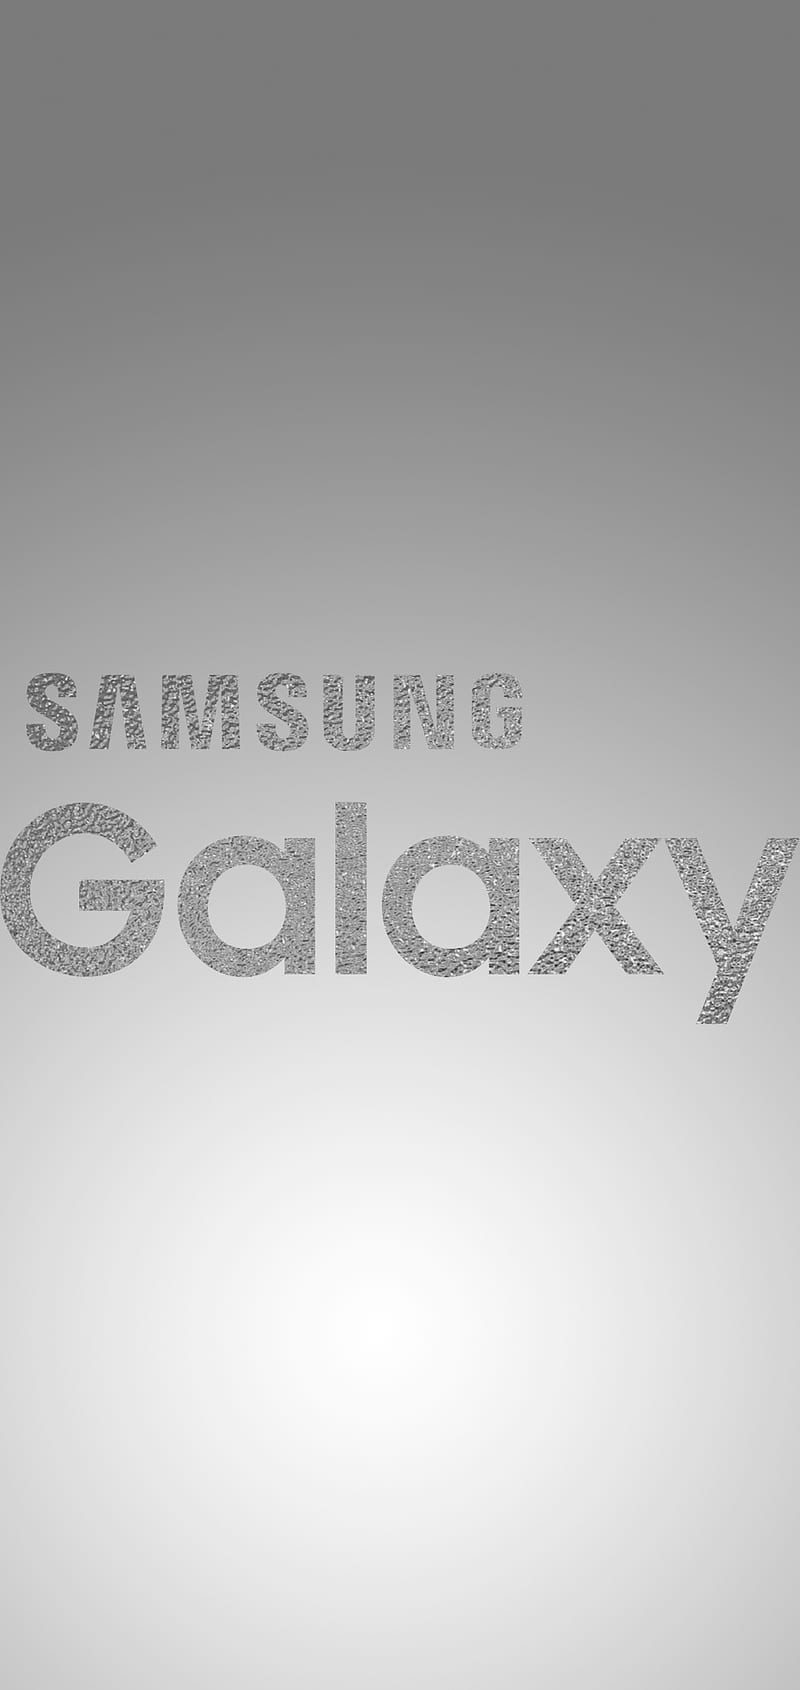 Samsung Galaxy Gray Gris Melesao S10 Plus Samsung S10 Plus Wallapaper Hd Mobile Wallpaper Peakpx